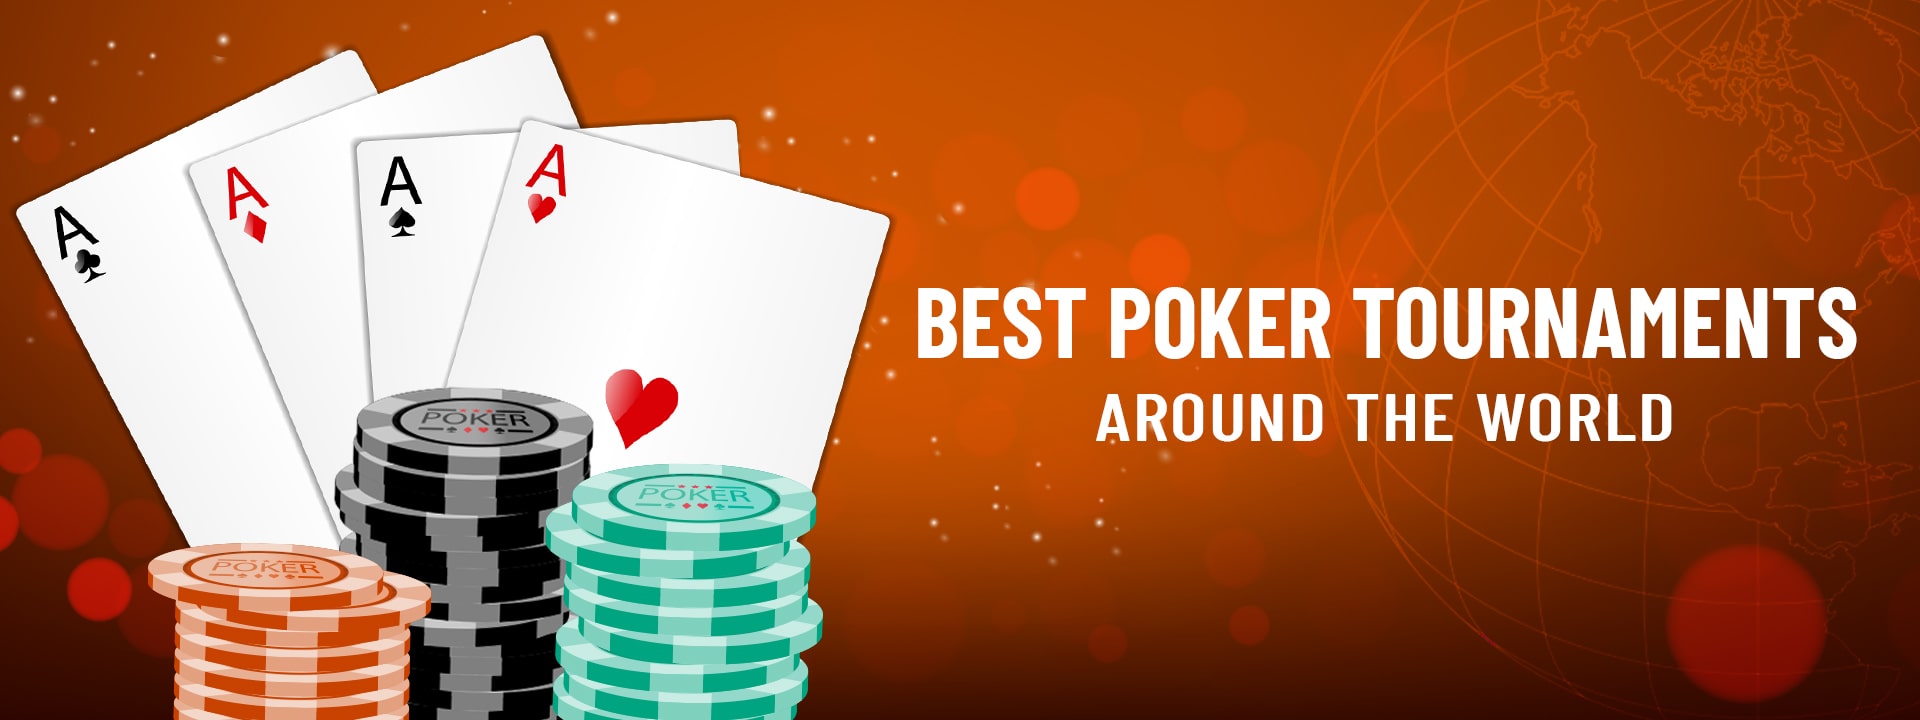 Best Poker Tournaments Around The World